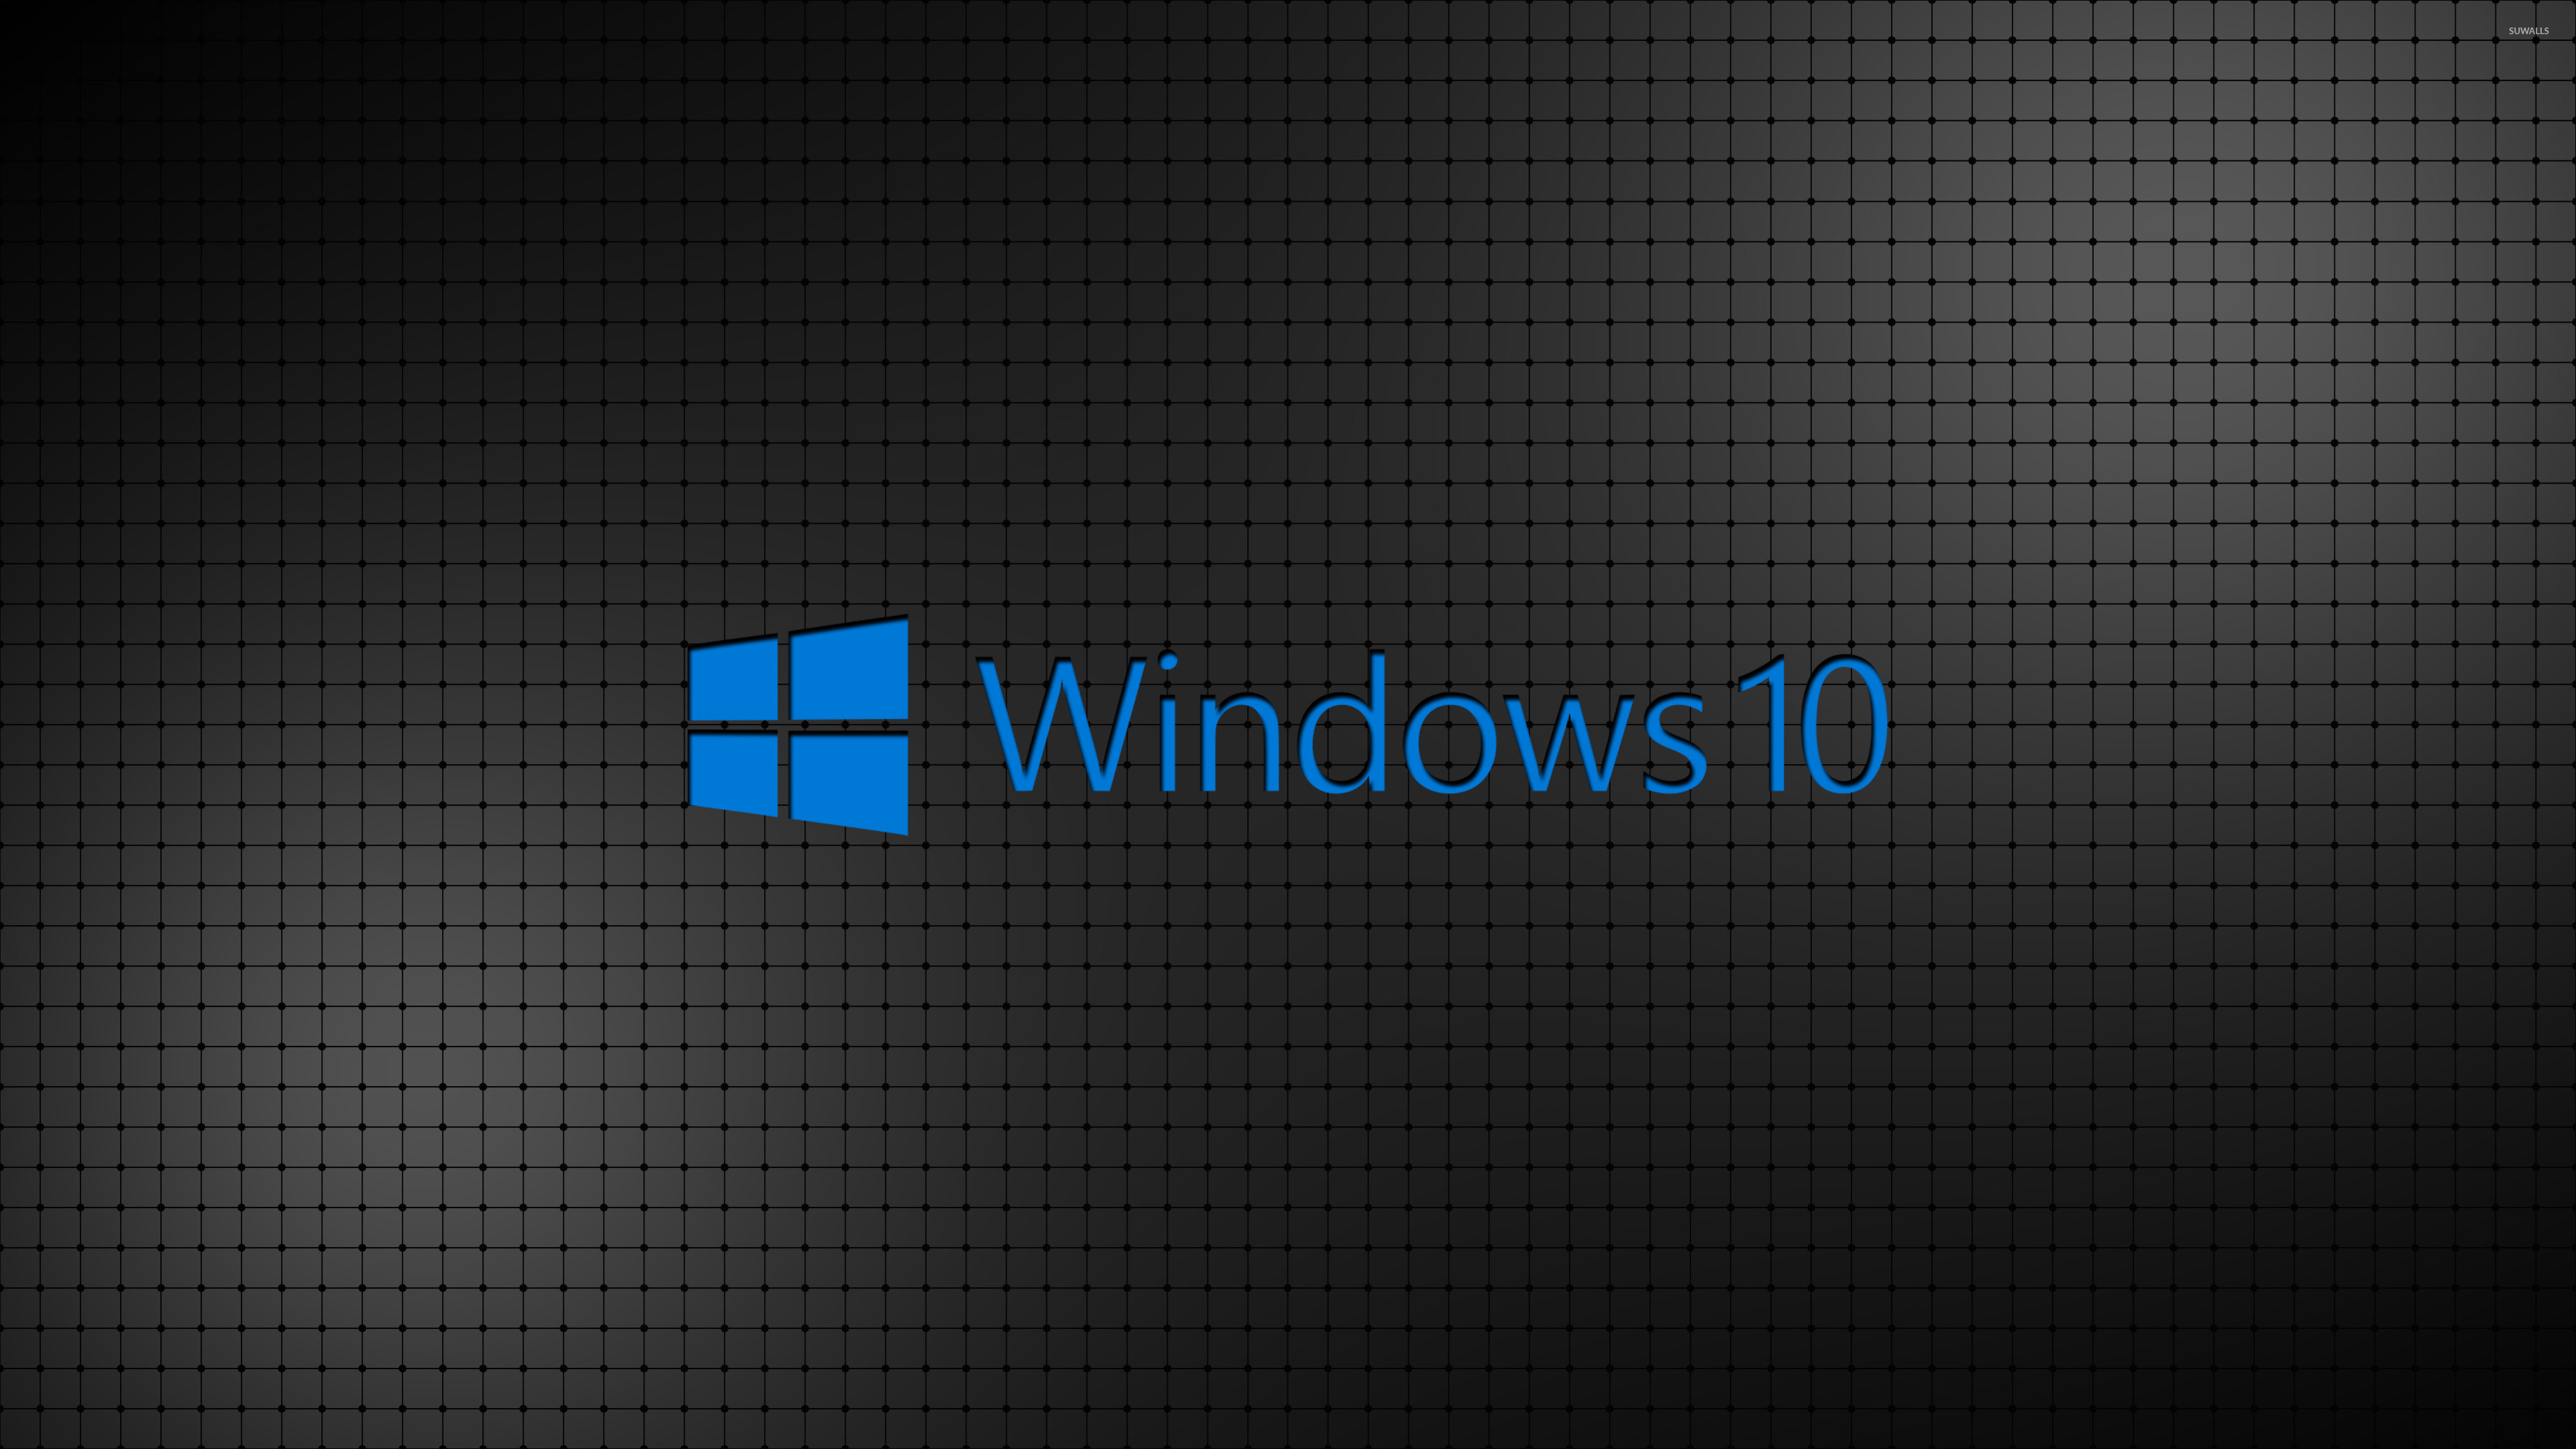 3840x2160 Windows 10 blue text logo on a grid wallpaper  jpg